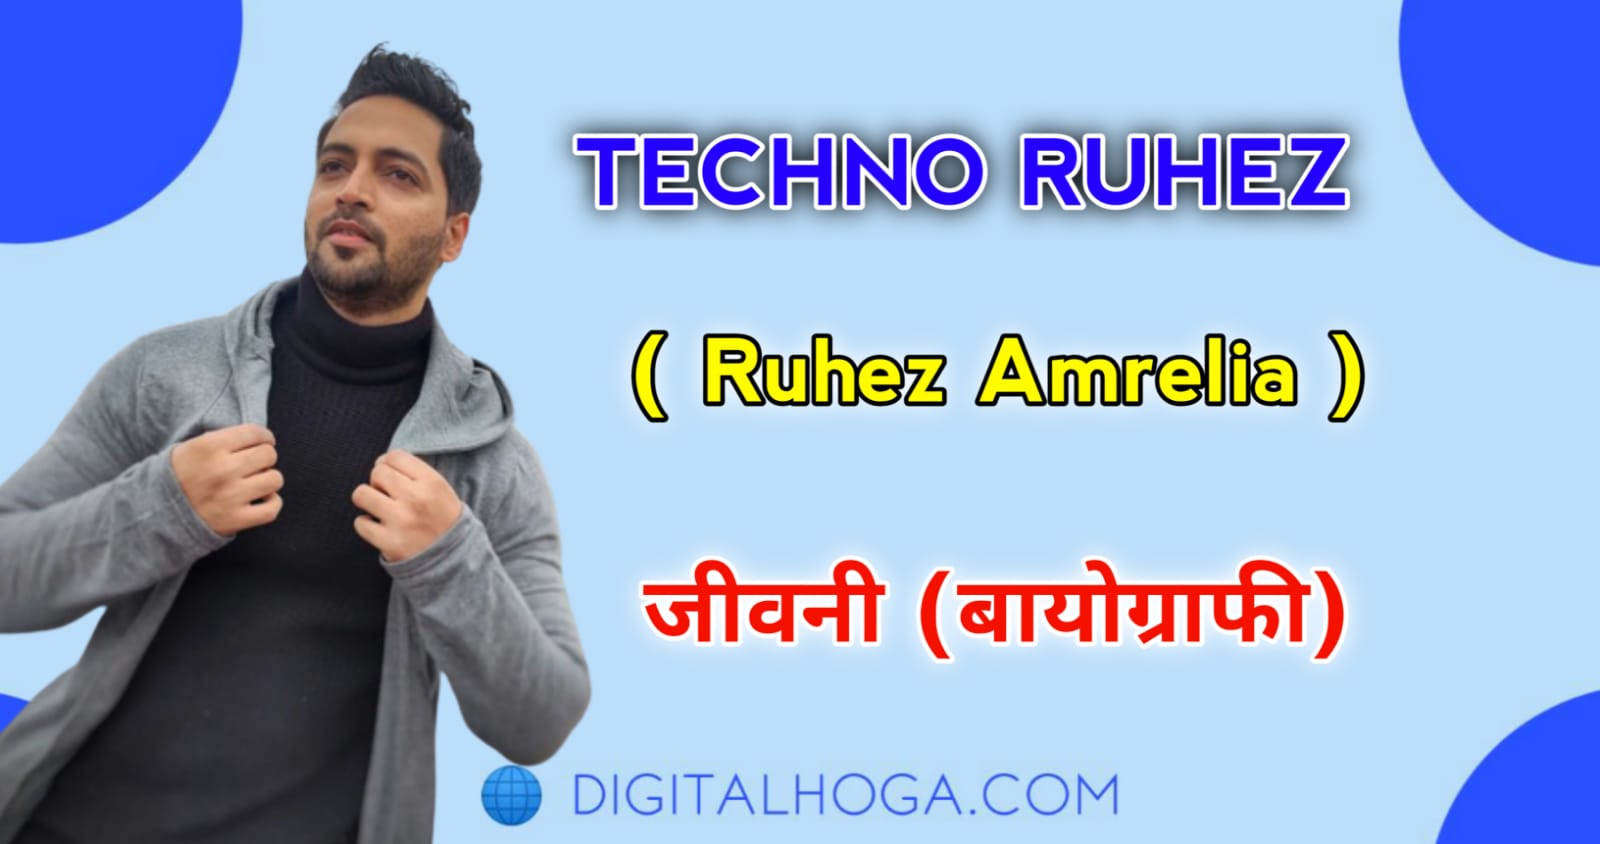 techno ruhez biography in hindi